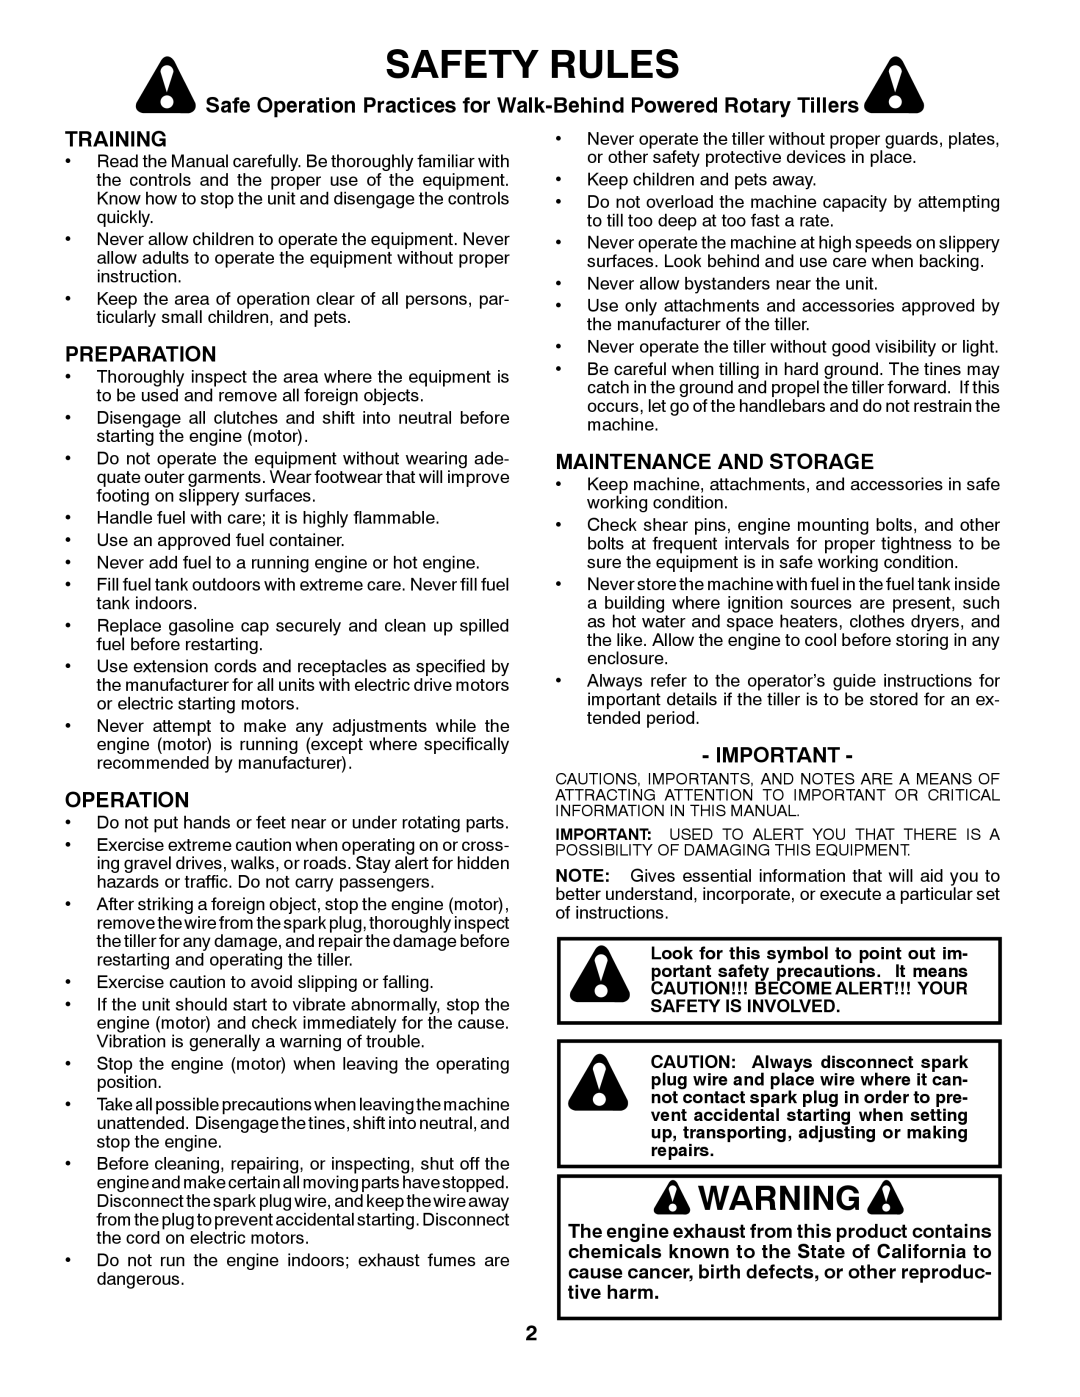 Poulan 423813 manual Safety Rules, Training, Preparation, Operation, Maintenance And Storage 